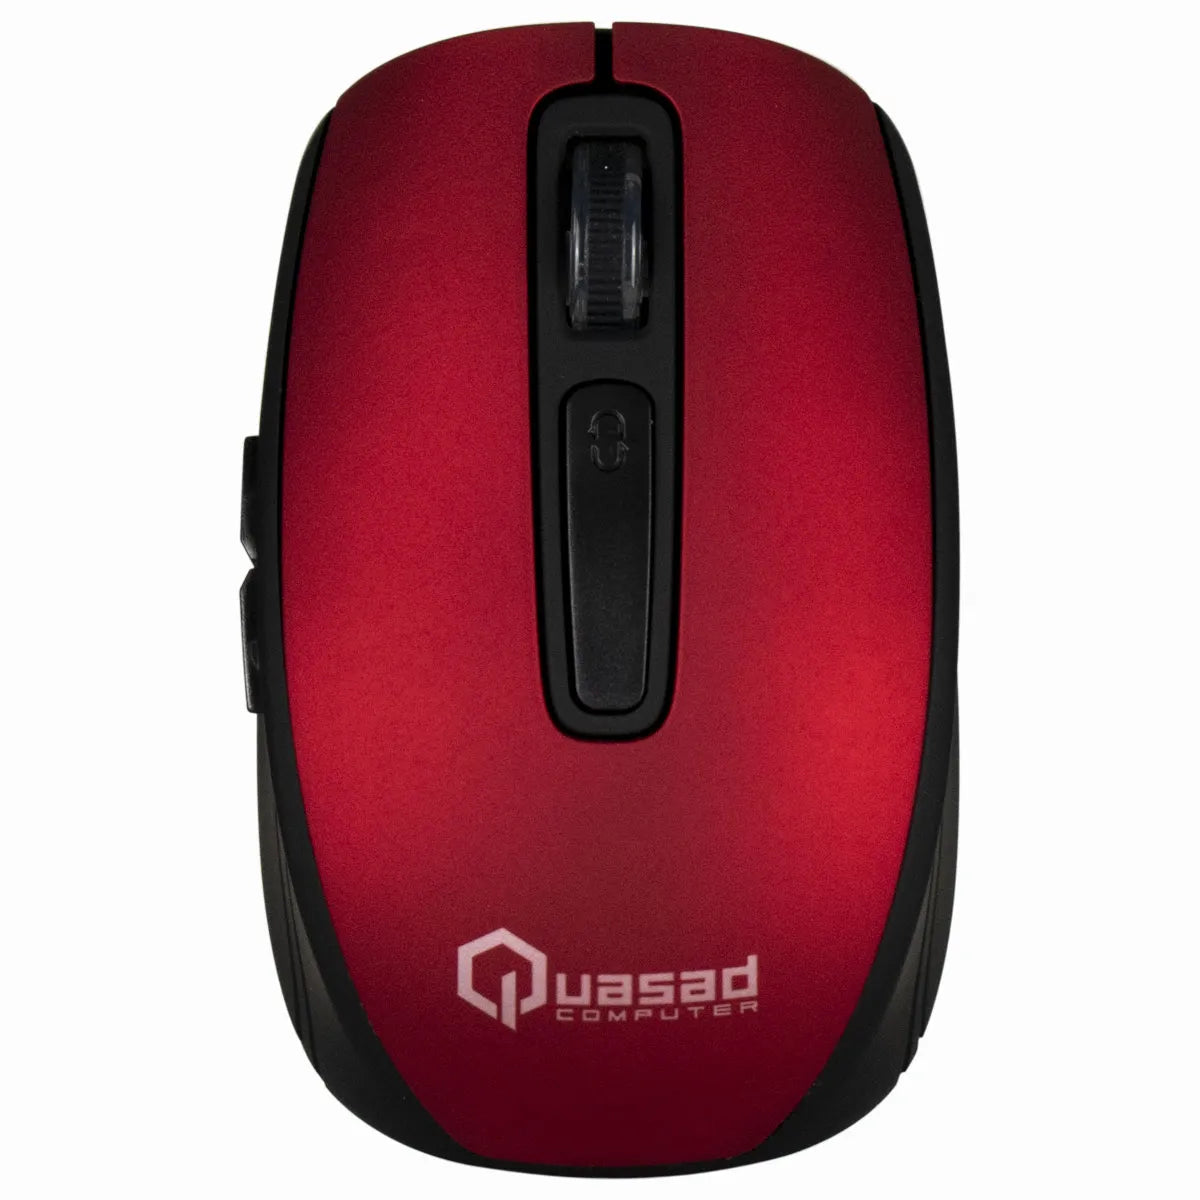 MOUSE QUASAD QM-850RED WIRELESS RECARGABLE USB Rojo